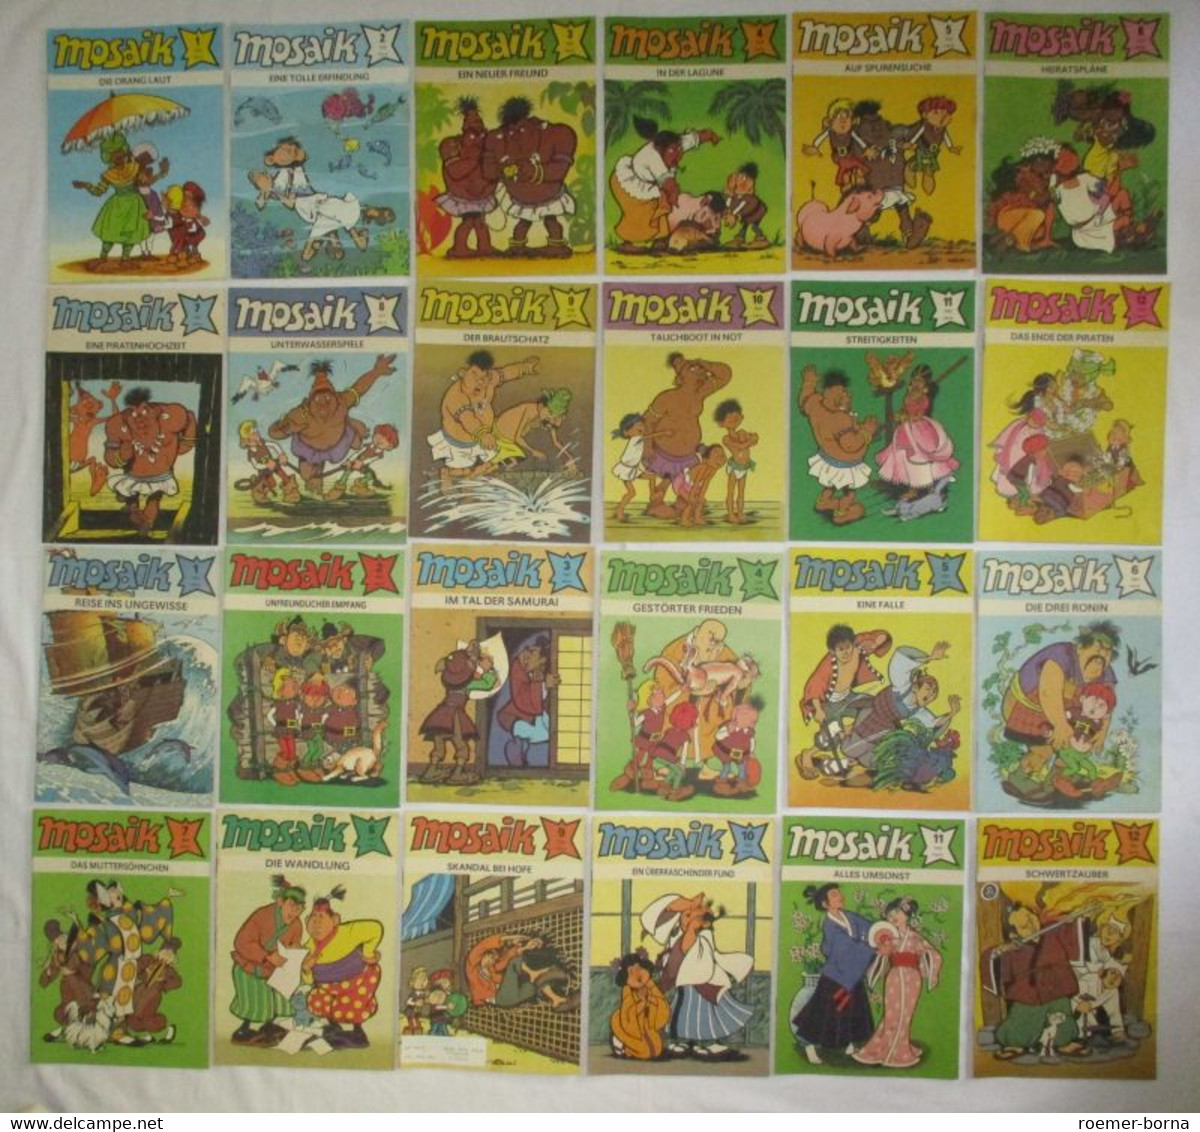 Mosaik Abrafaxe 1/1976 bis 312/2001 komplett 312 Hefte (132440)